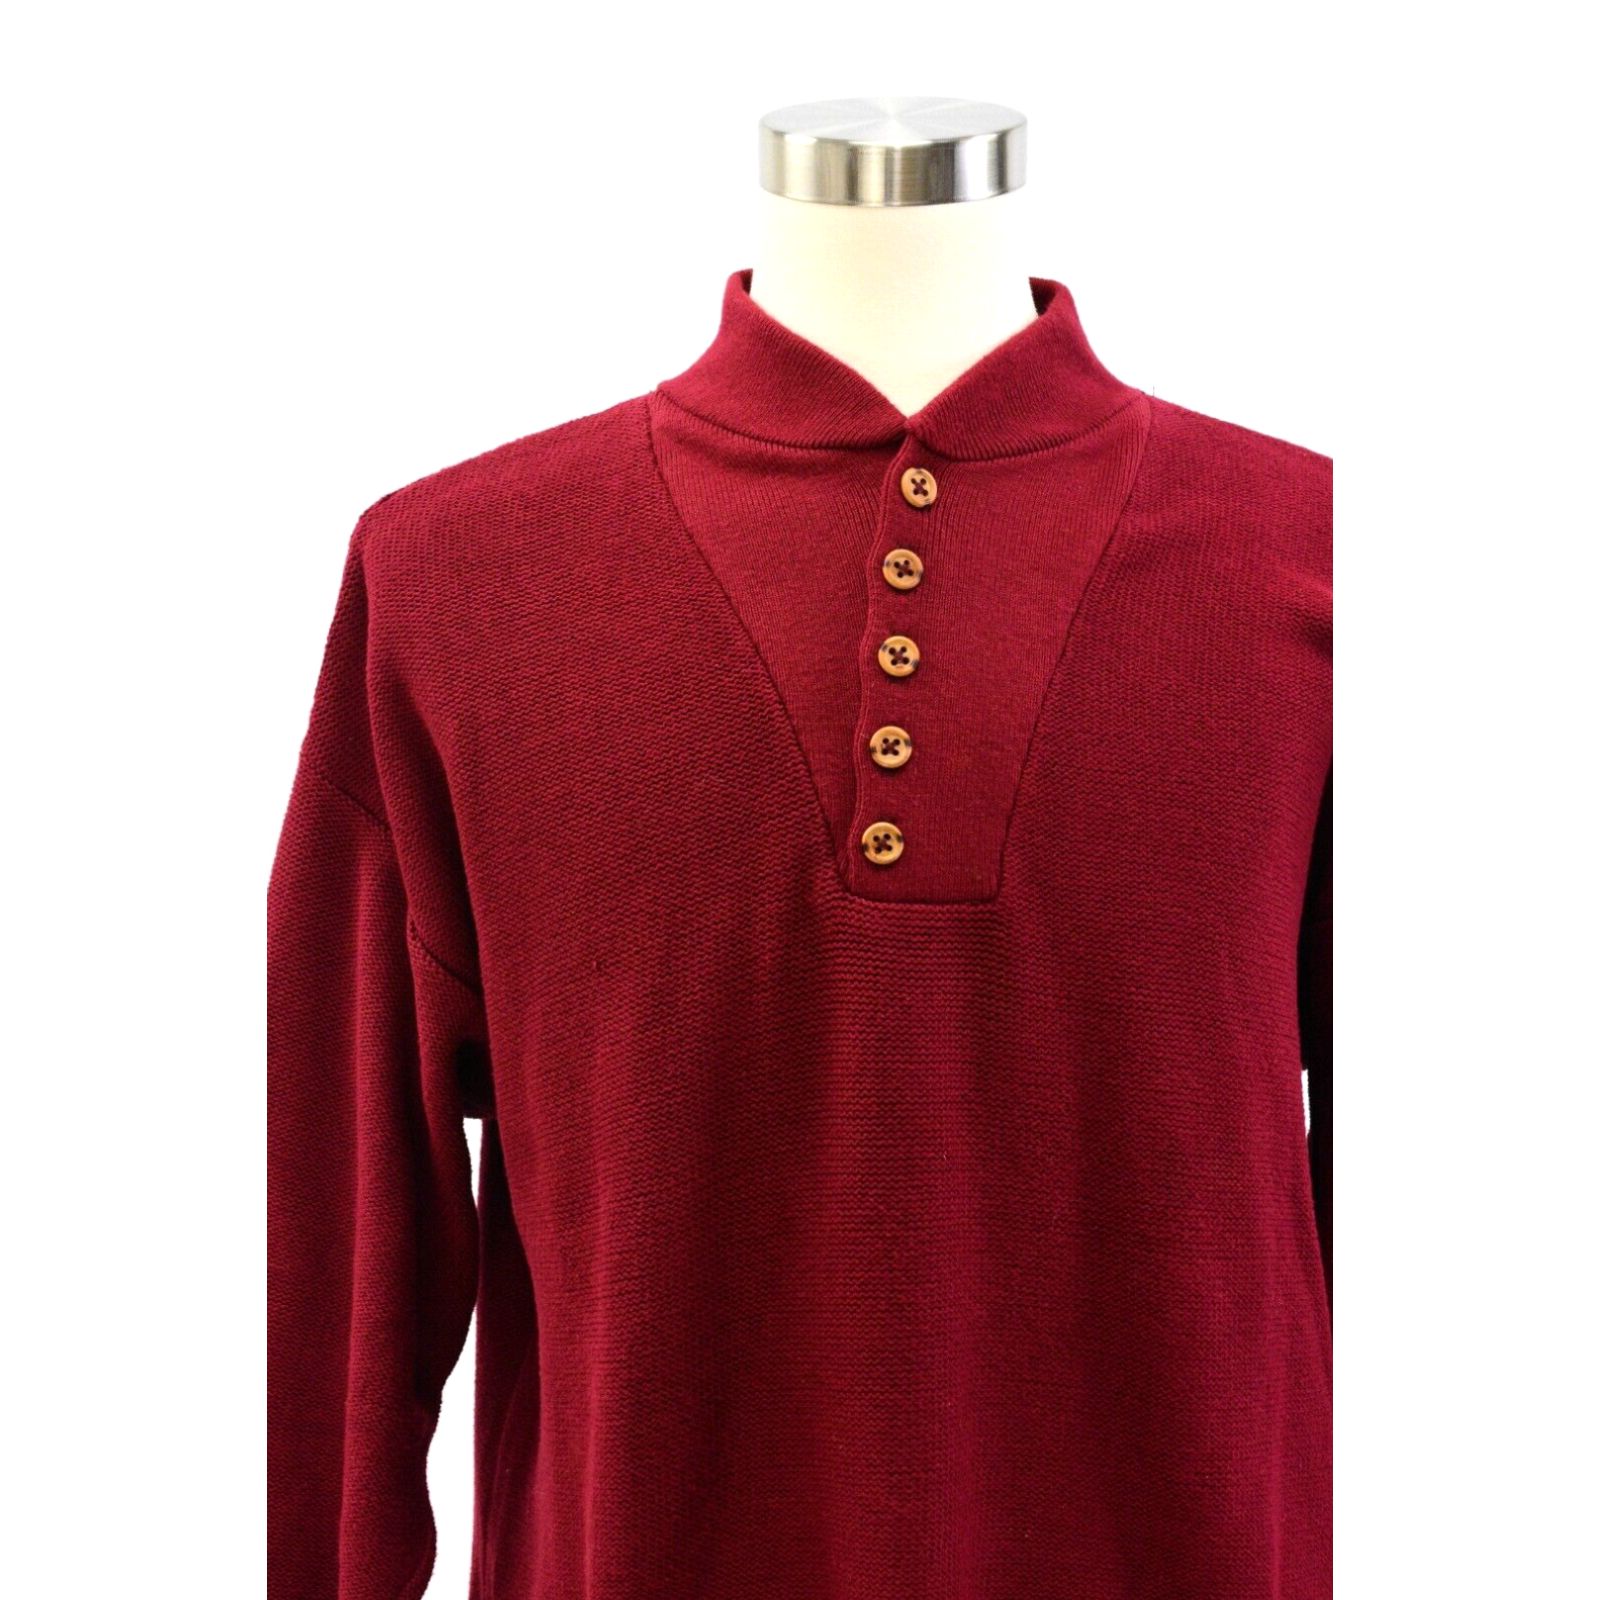 Vintage 90s Vintage Mens L Brick Red Lands' End Henley Sweater Knit Cotton Relaxed Fit Size US L / EU 52-54 / 3 - 3 Thumbnail